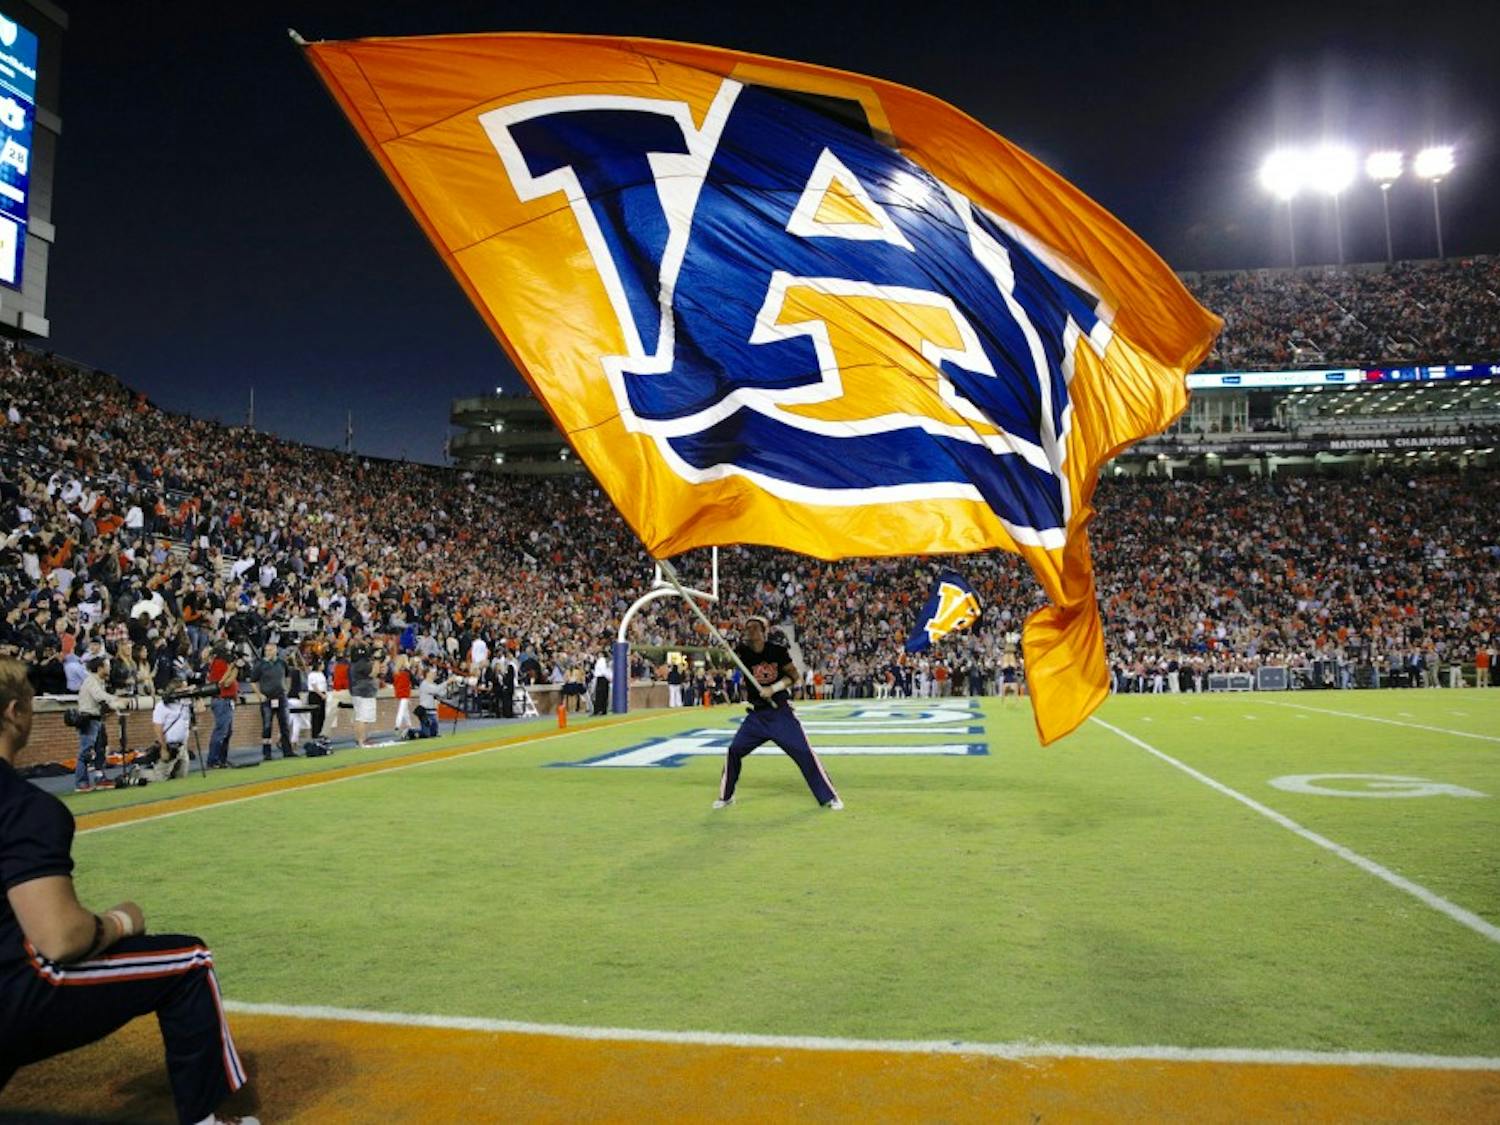 Trenton White waves the flag after Auburn scores a touchdown in Jordan-Hare Stadium on Oct. 22, 2016.